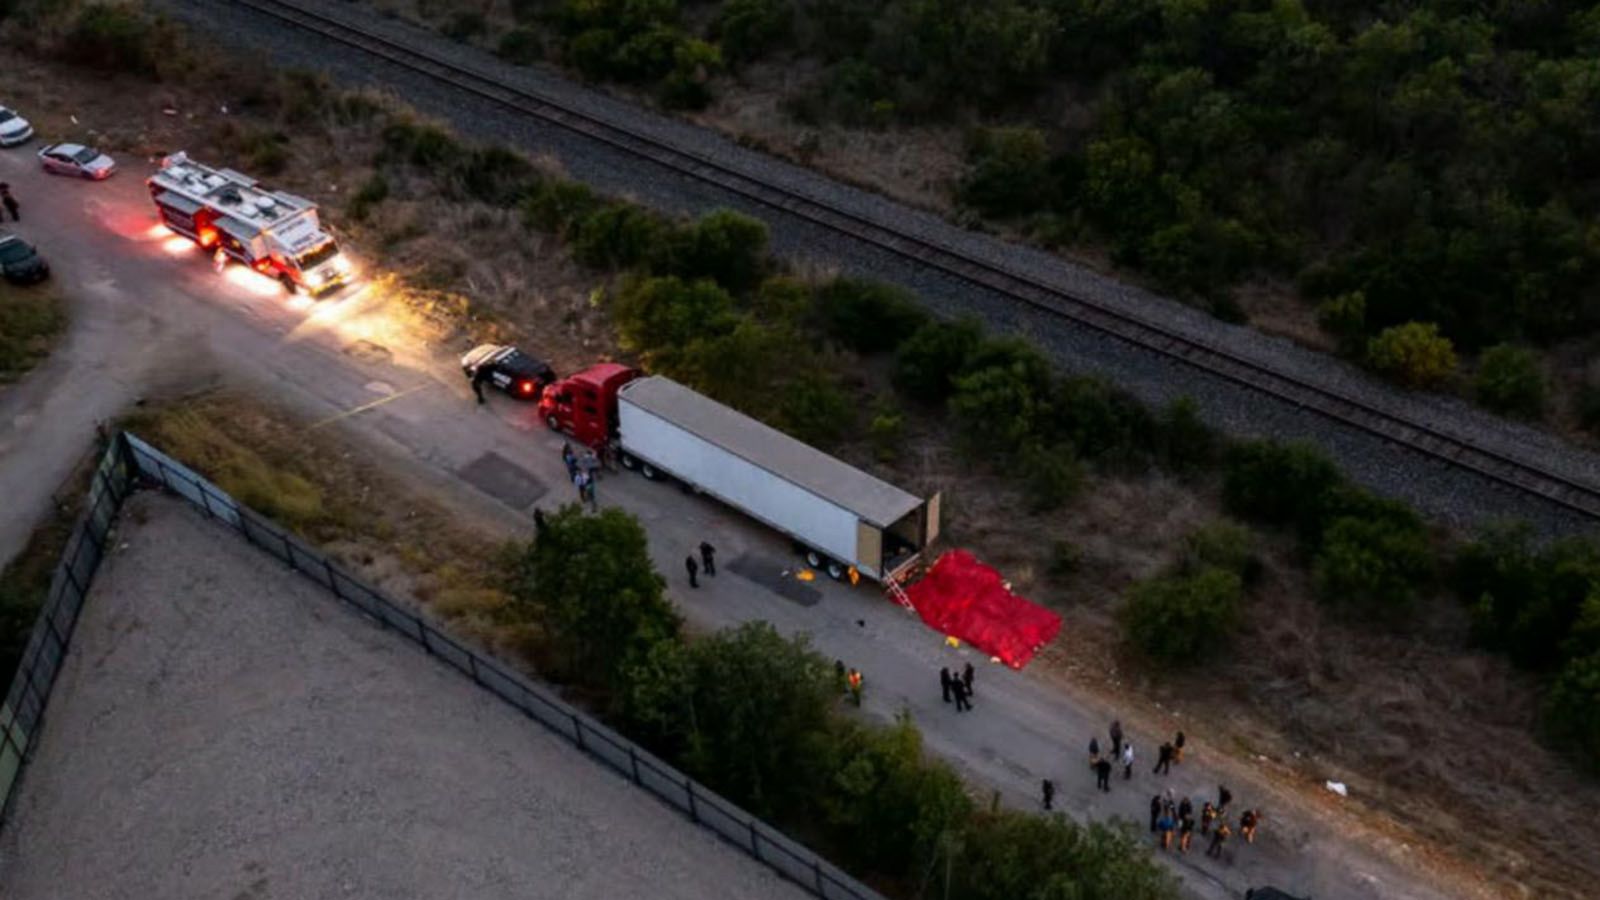 46 Found Dead In Tractor Trailer In San Antonio Texas Good Morning 